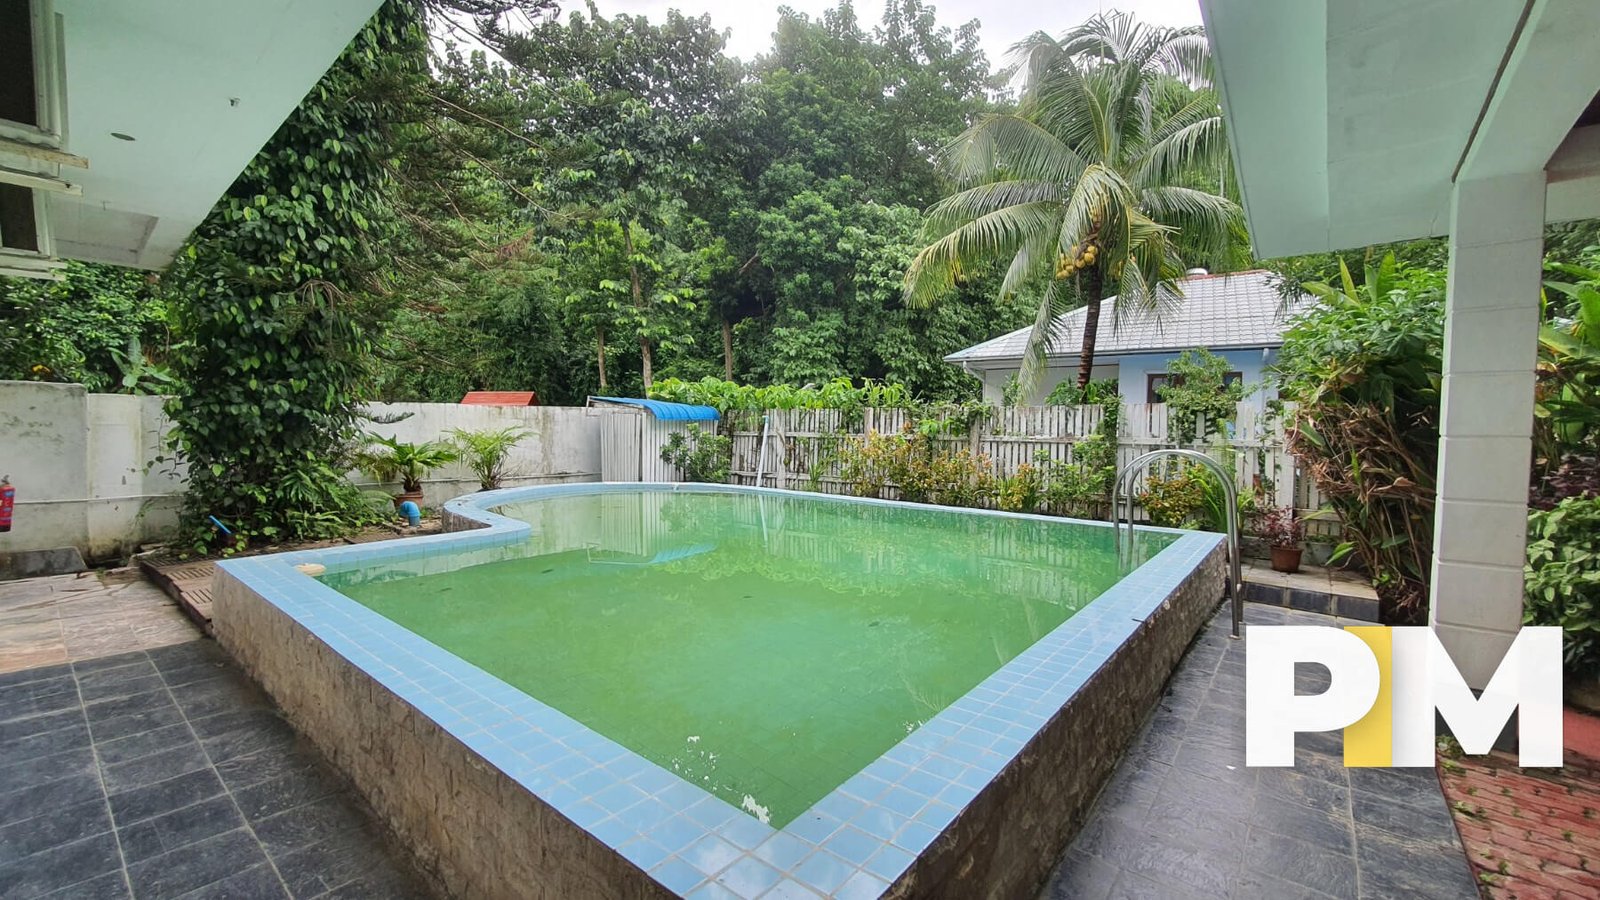 Pool view - Property in Yangon